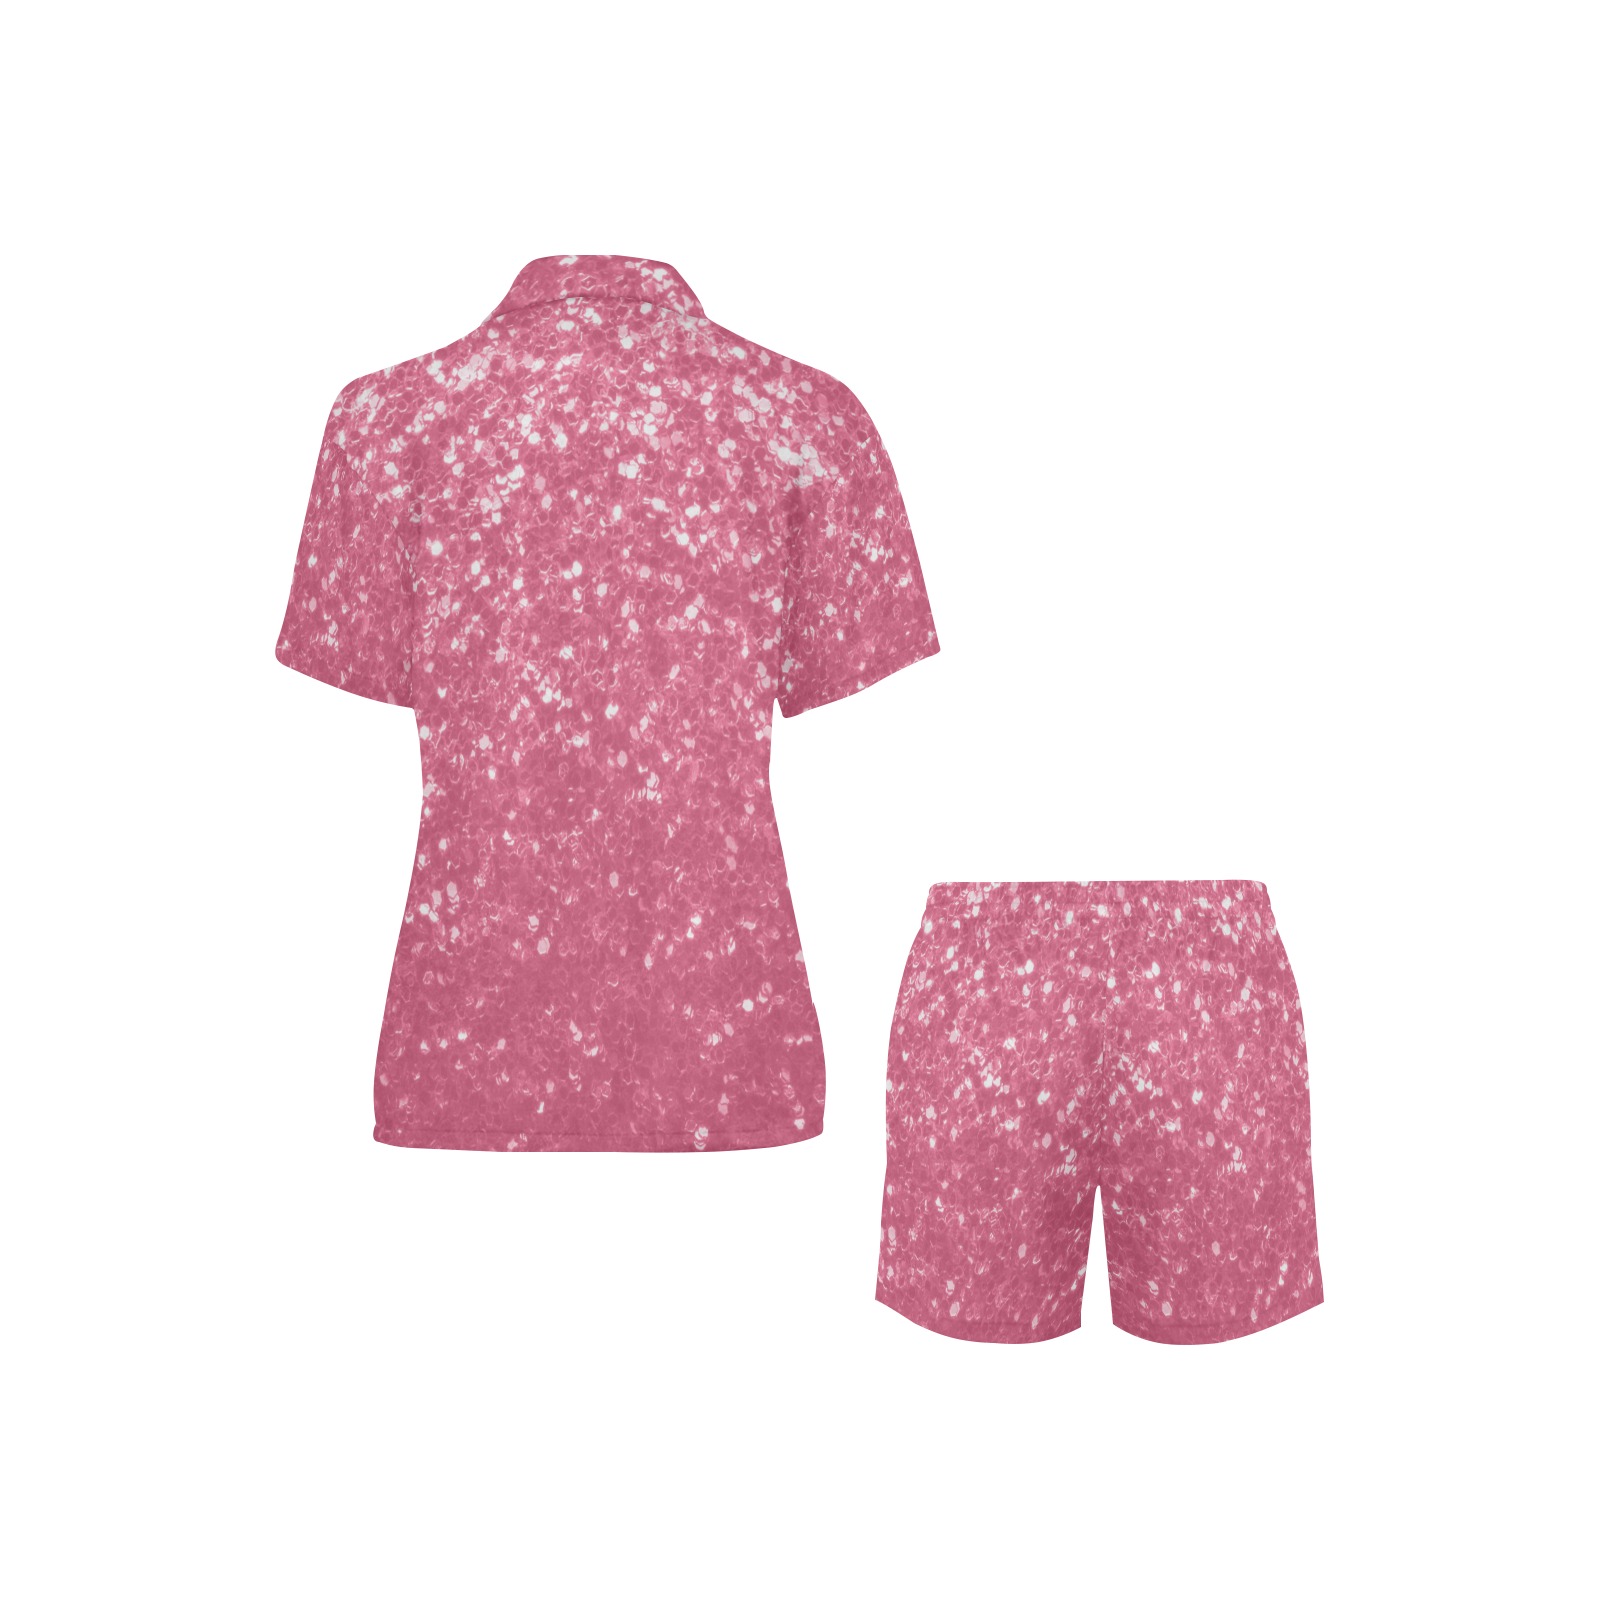 Magenta light pink red faux sparkles glitter Women's V-Neck Short Pajama Set